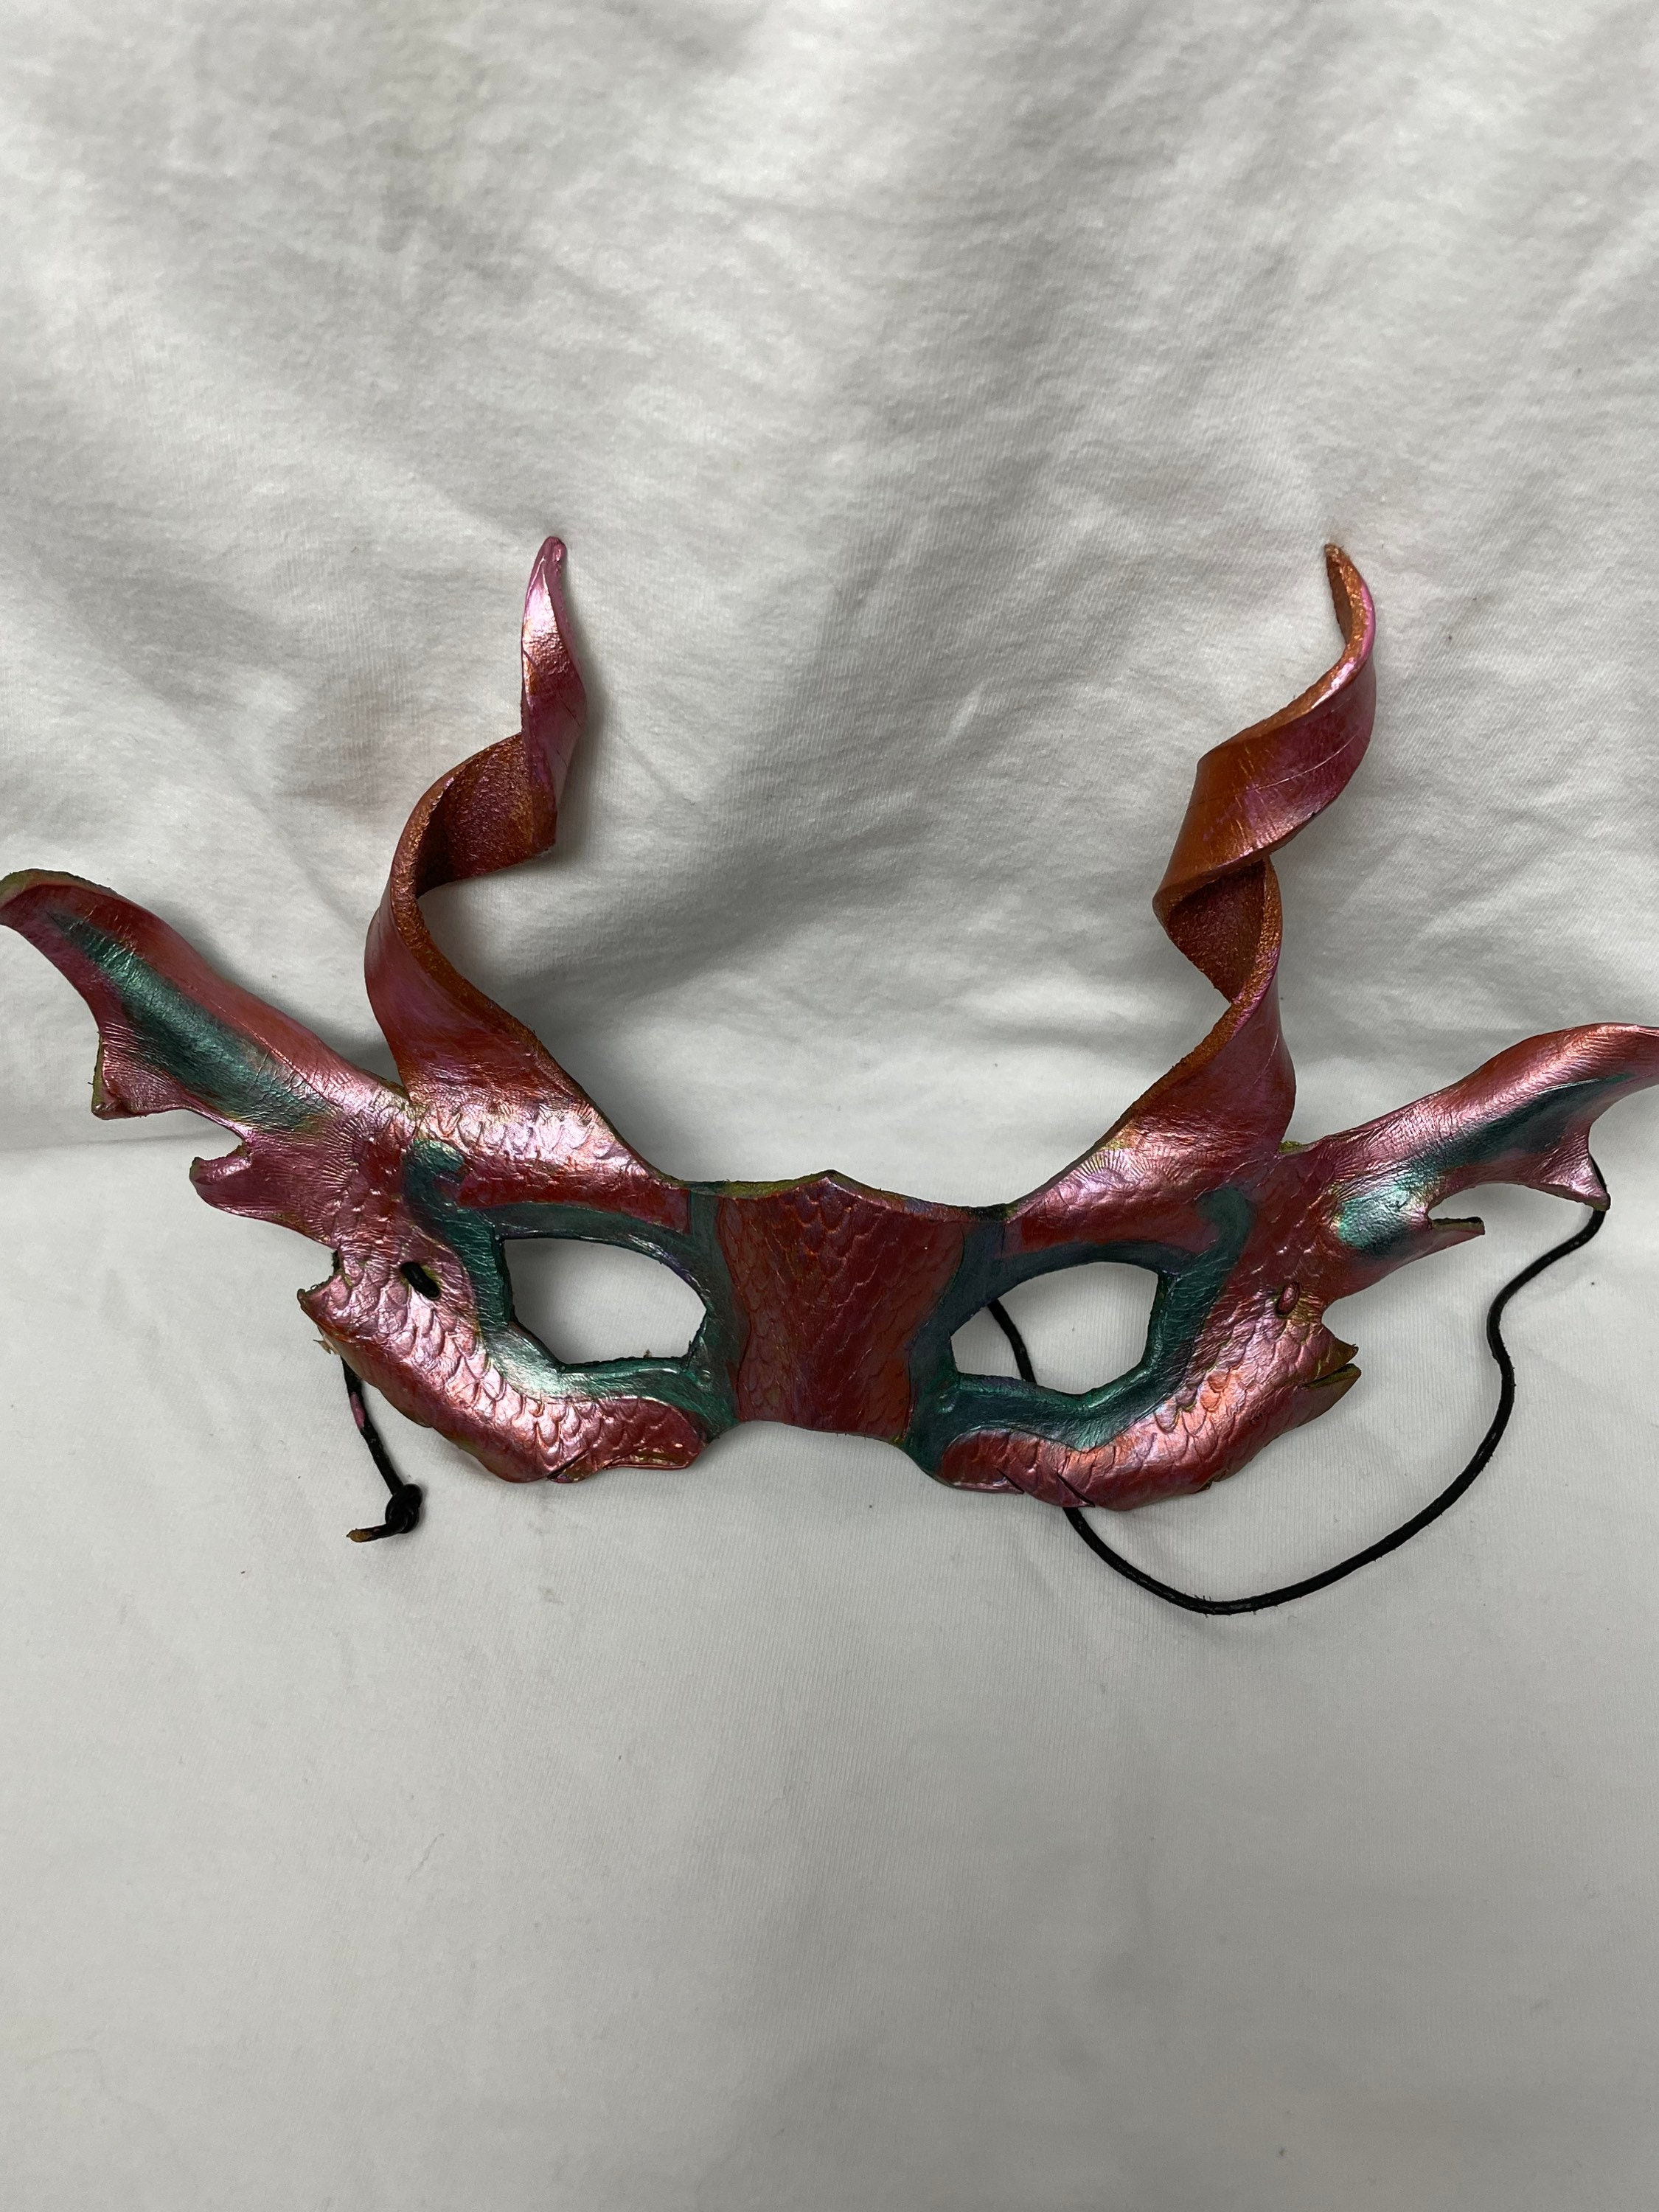 Leather Dragon Mask Muzzle Half Face MASK Fantasy Larp Cosplay Costume  Warrior Alchemist Steampunk High Quality Leather Red Black Custom 